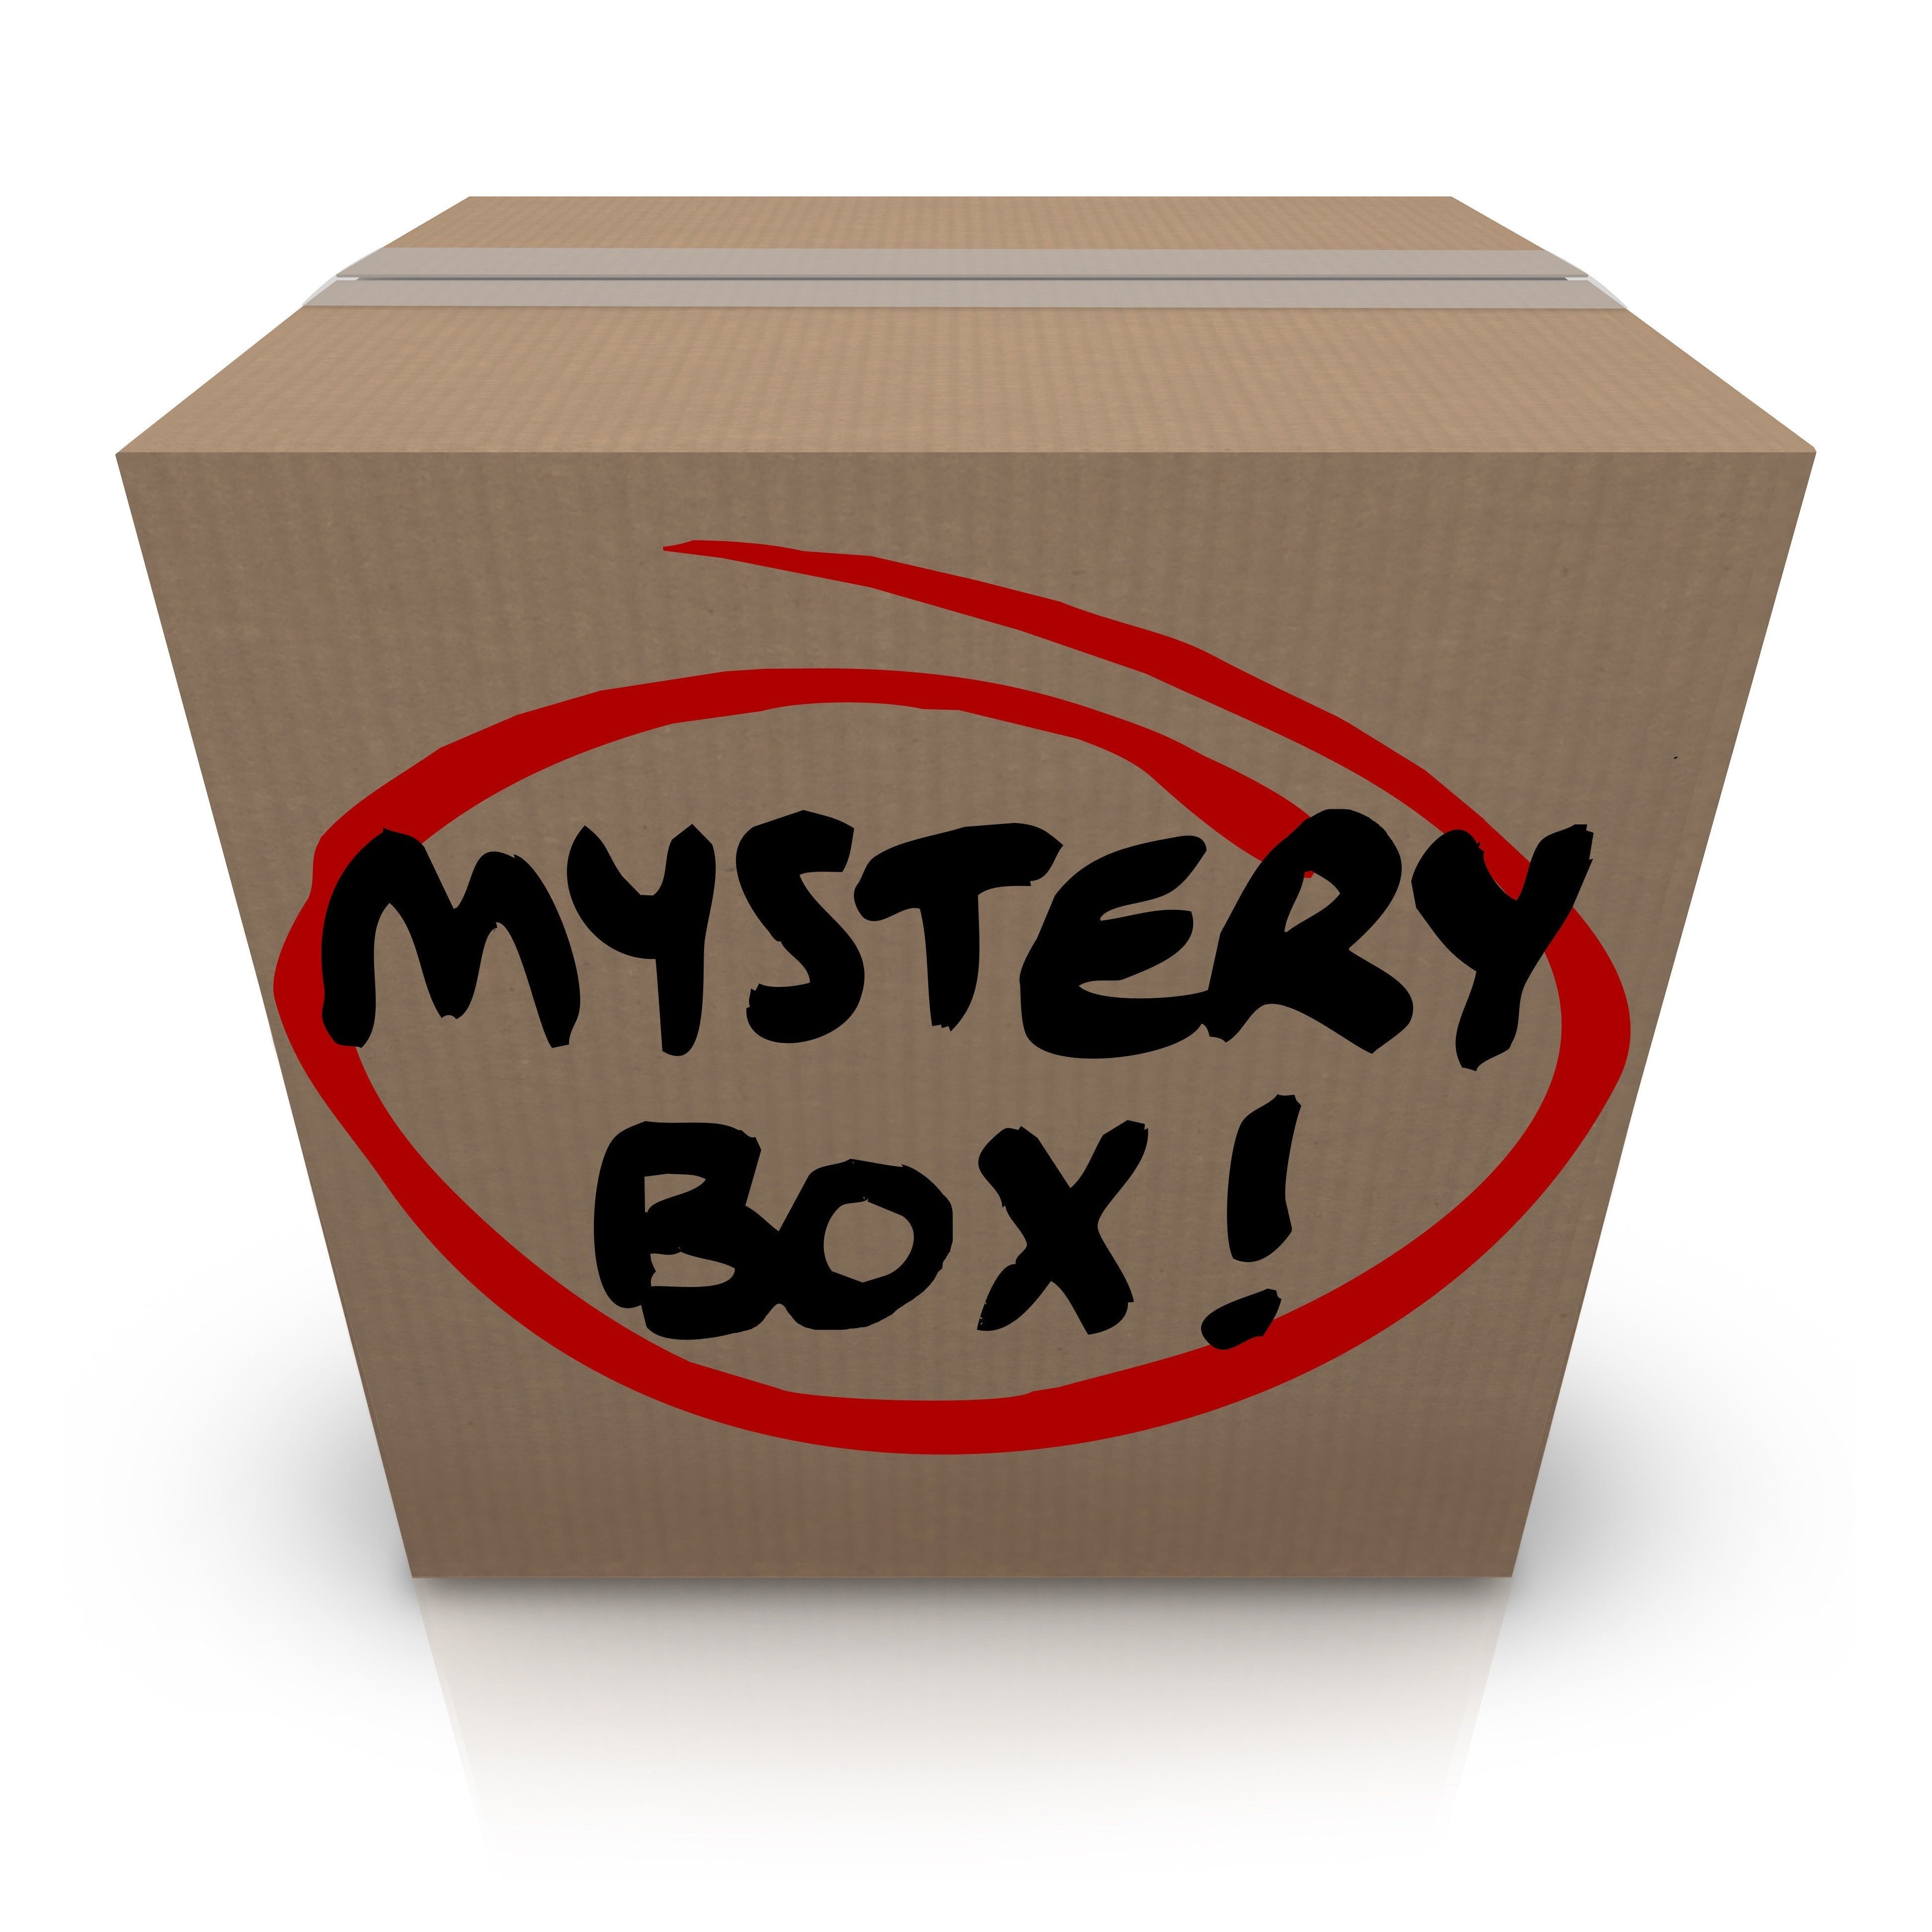 Clothing Mystery Box